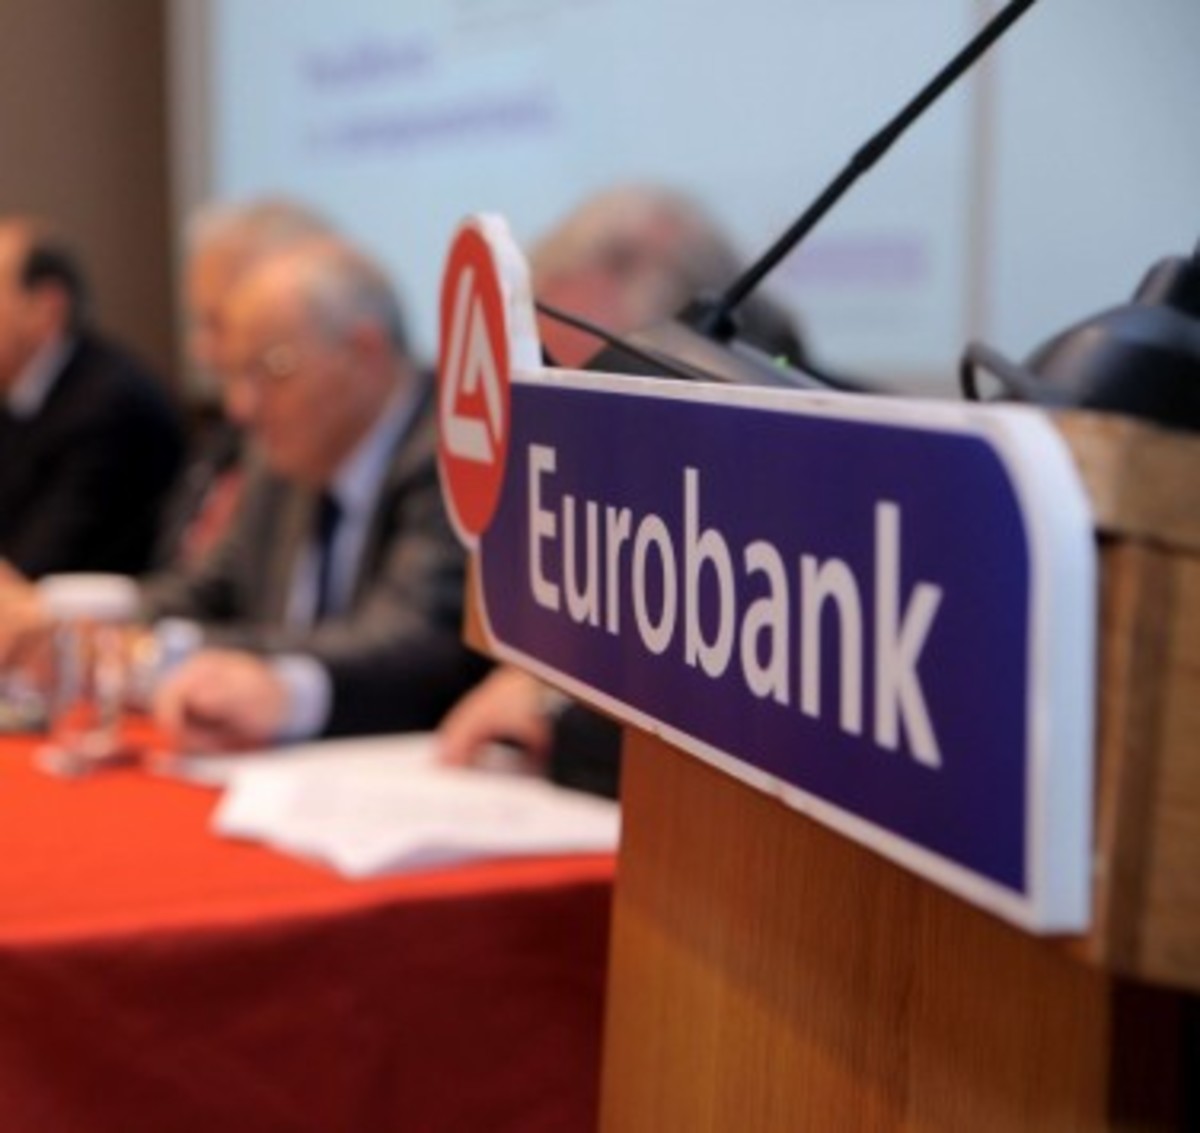 Eurobank: Καμία καθυστέρηση στις μεταρρυθμίσεις για να αρχίσει η κουβέντα για το χρέος